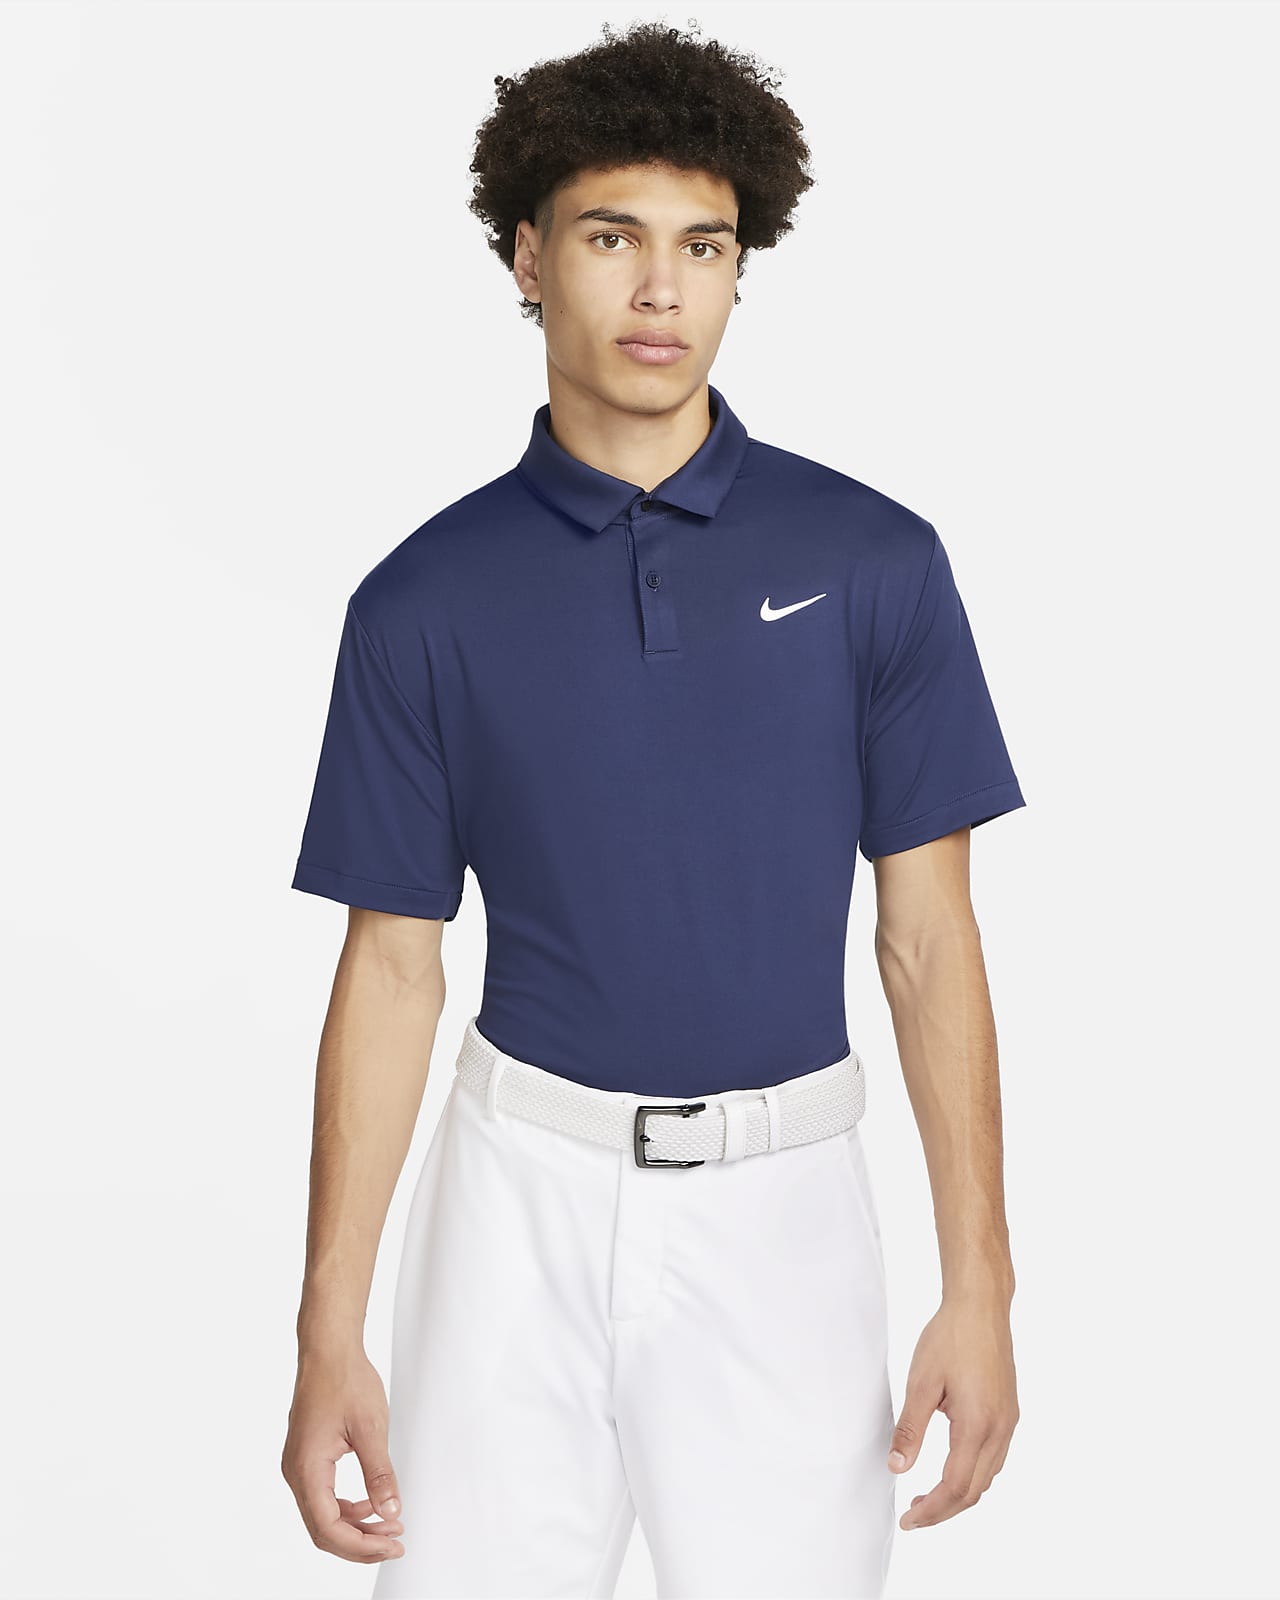 Nike The Athletic Dept Polo Shirt Mens Size XL Gray Stripe Short